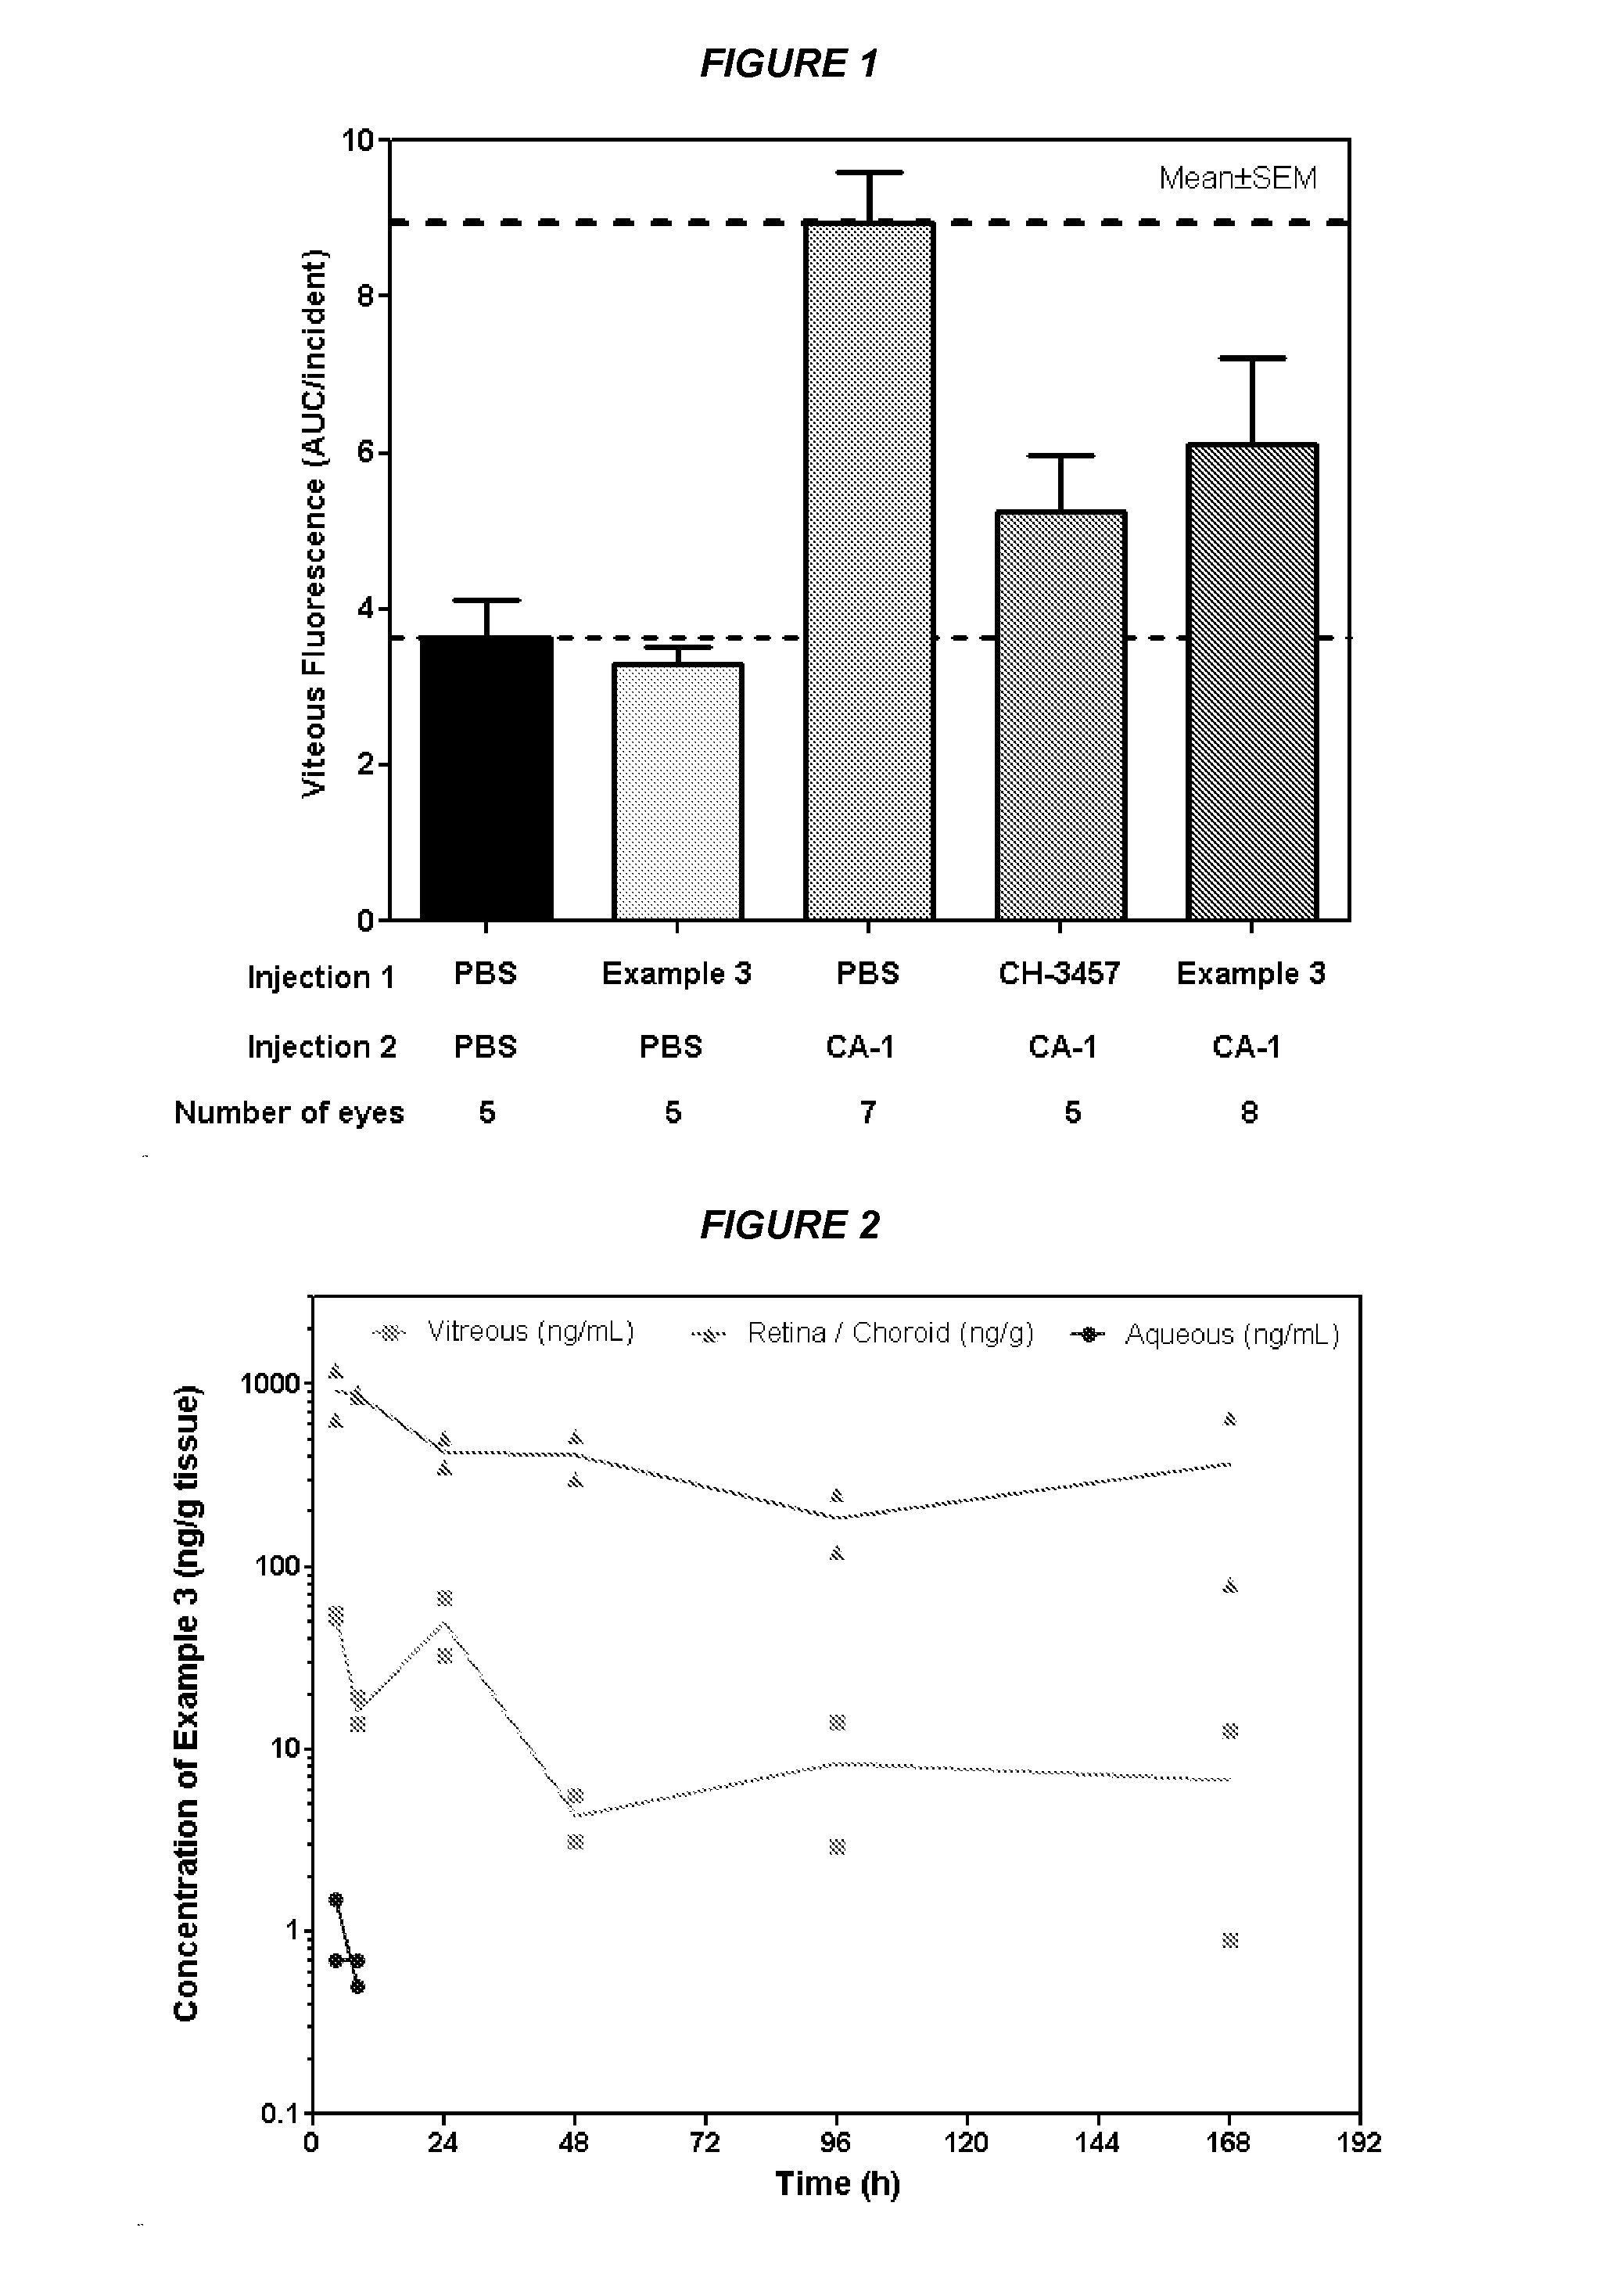 Benzylamine derivatives as inhibitors of plasma kallikrein